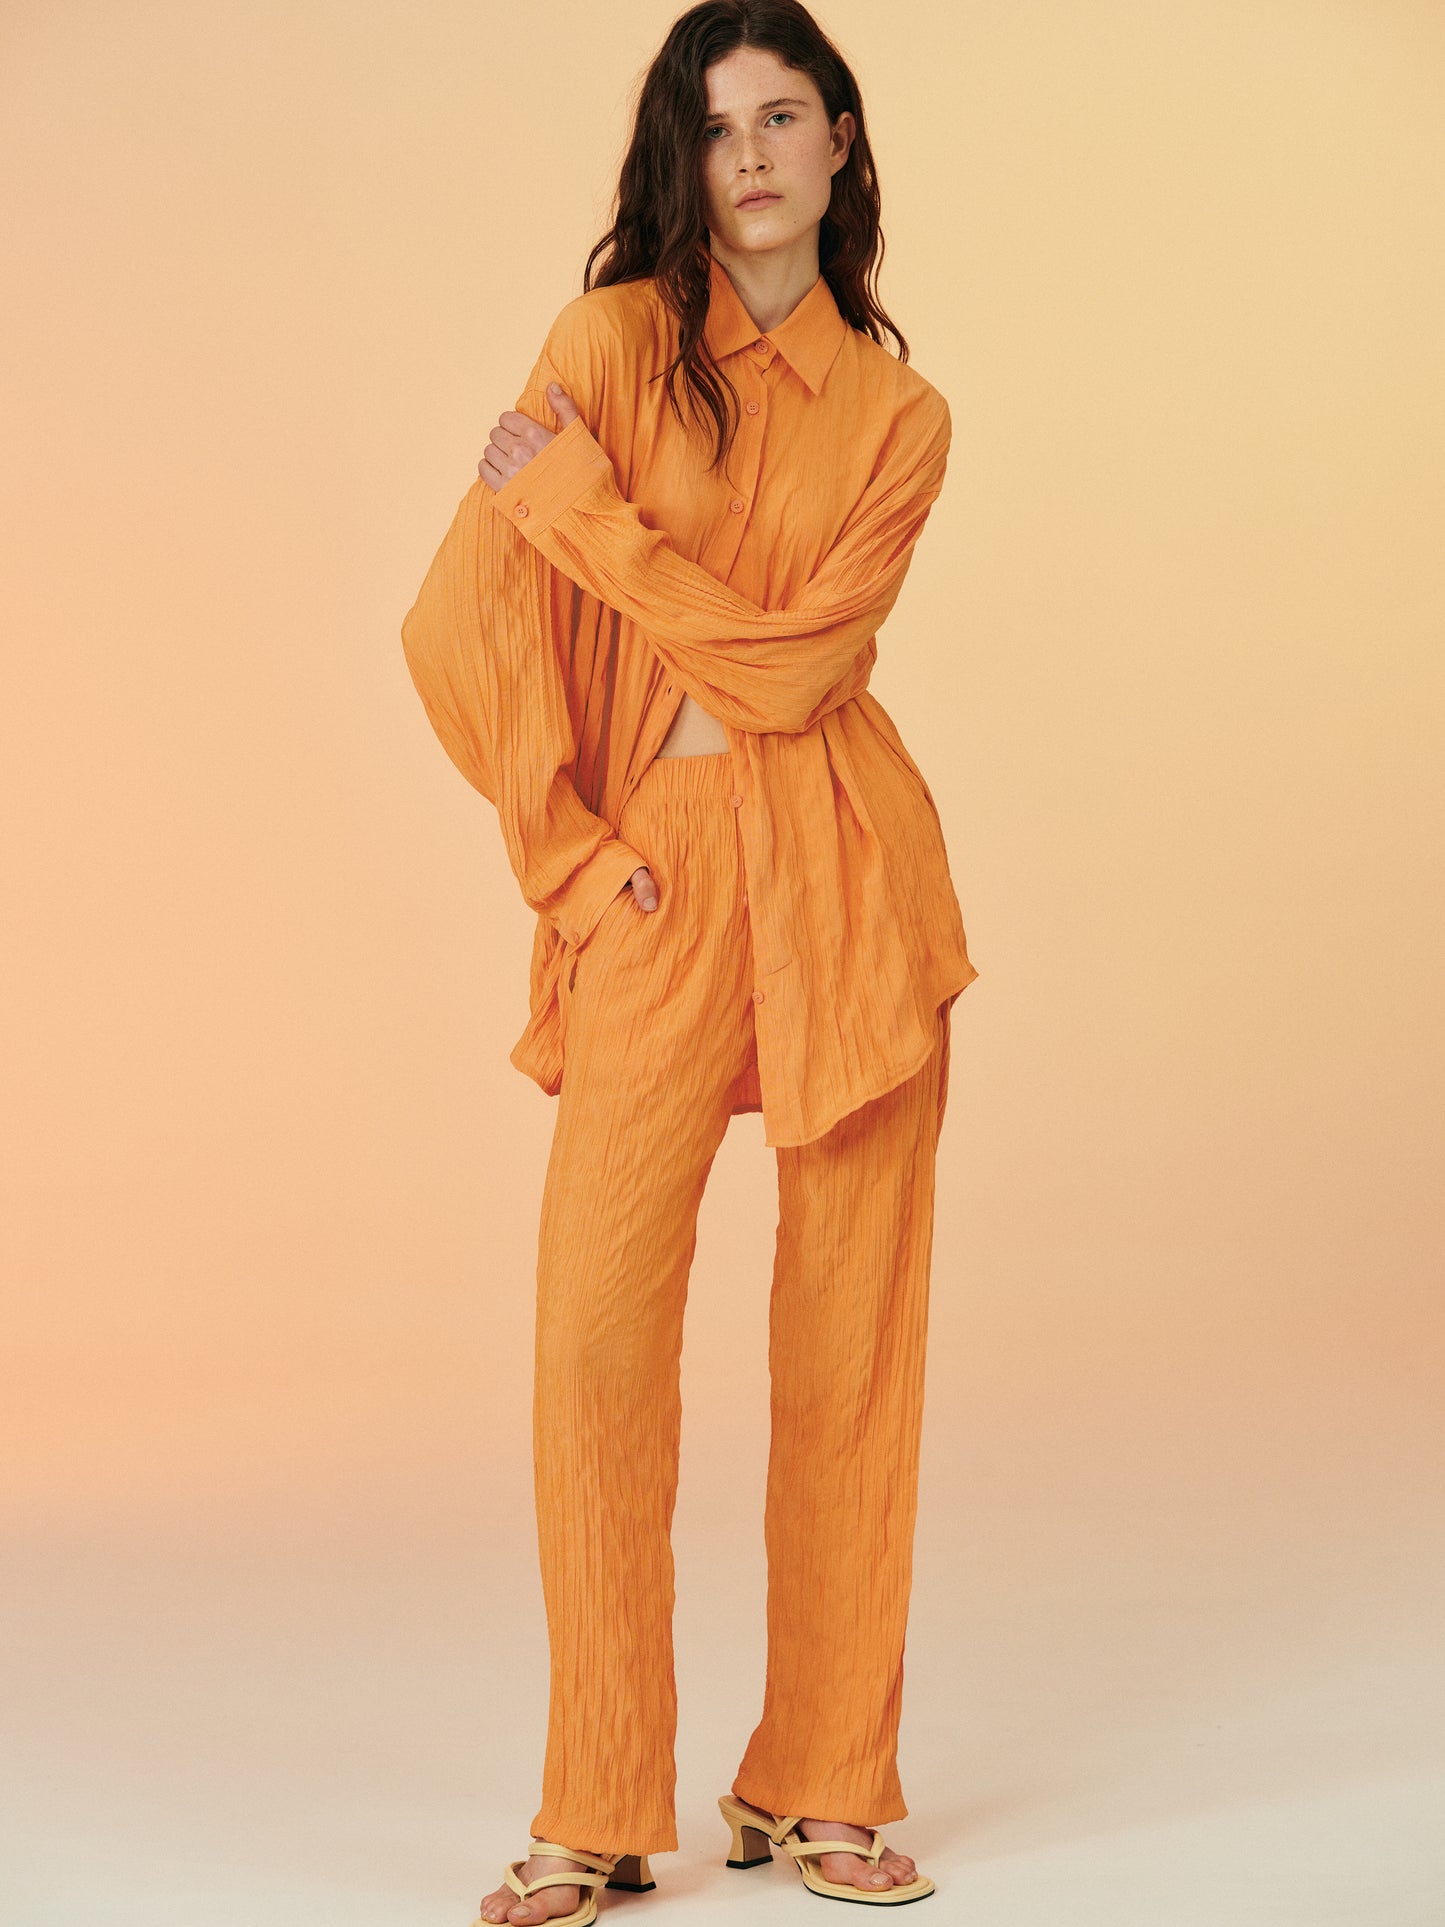 Crinkled Garment-Pleated Shirt, Orange